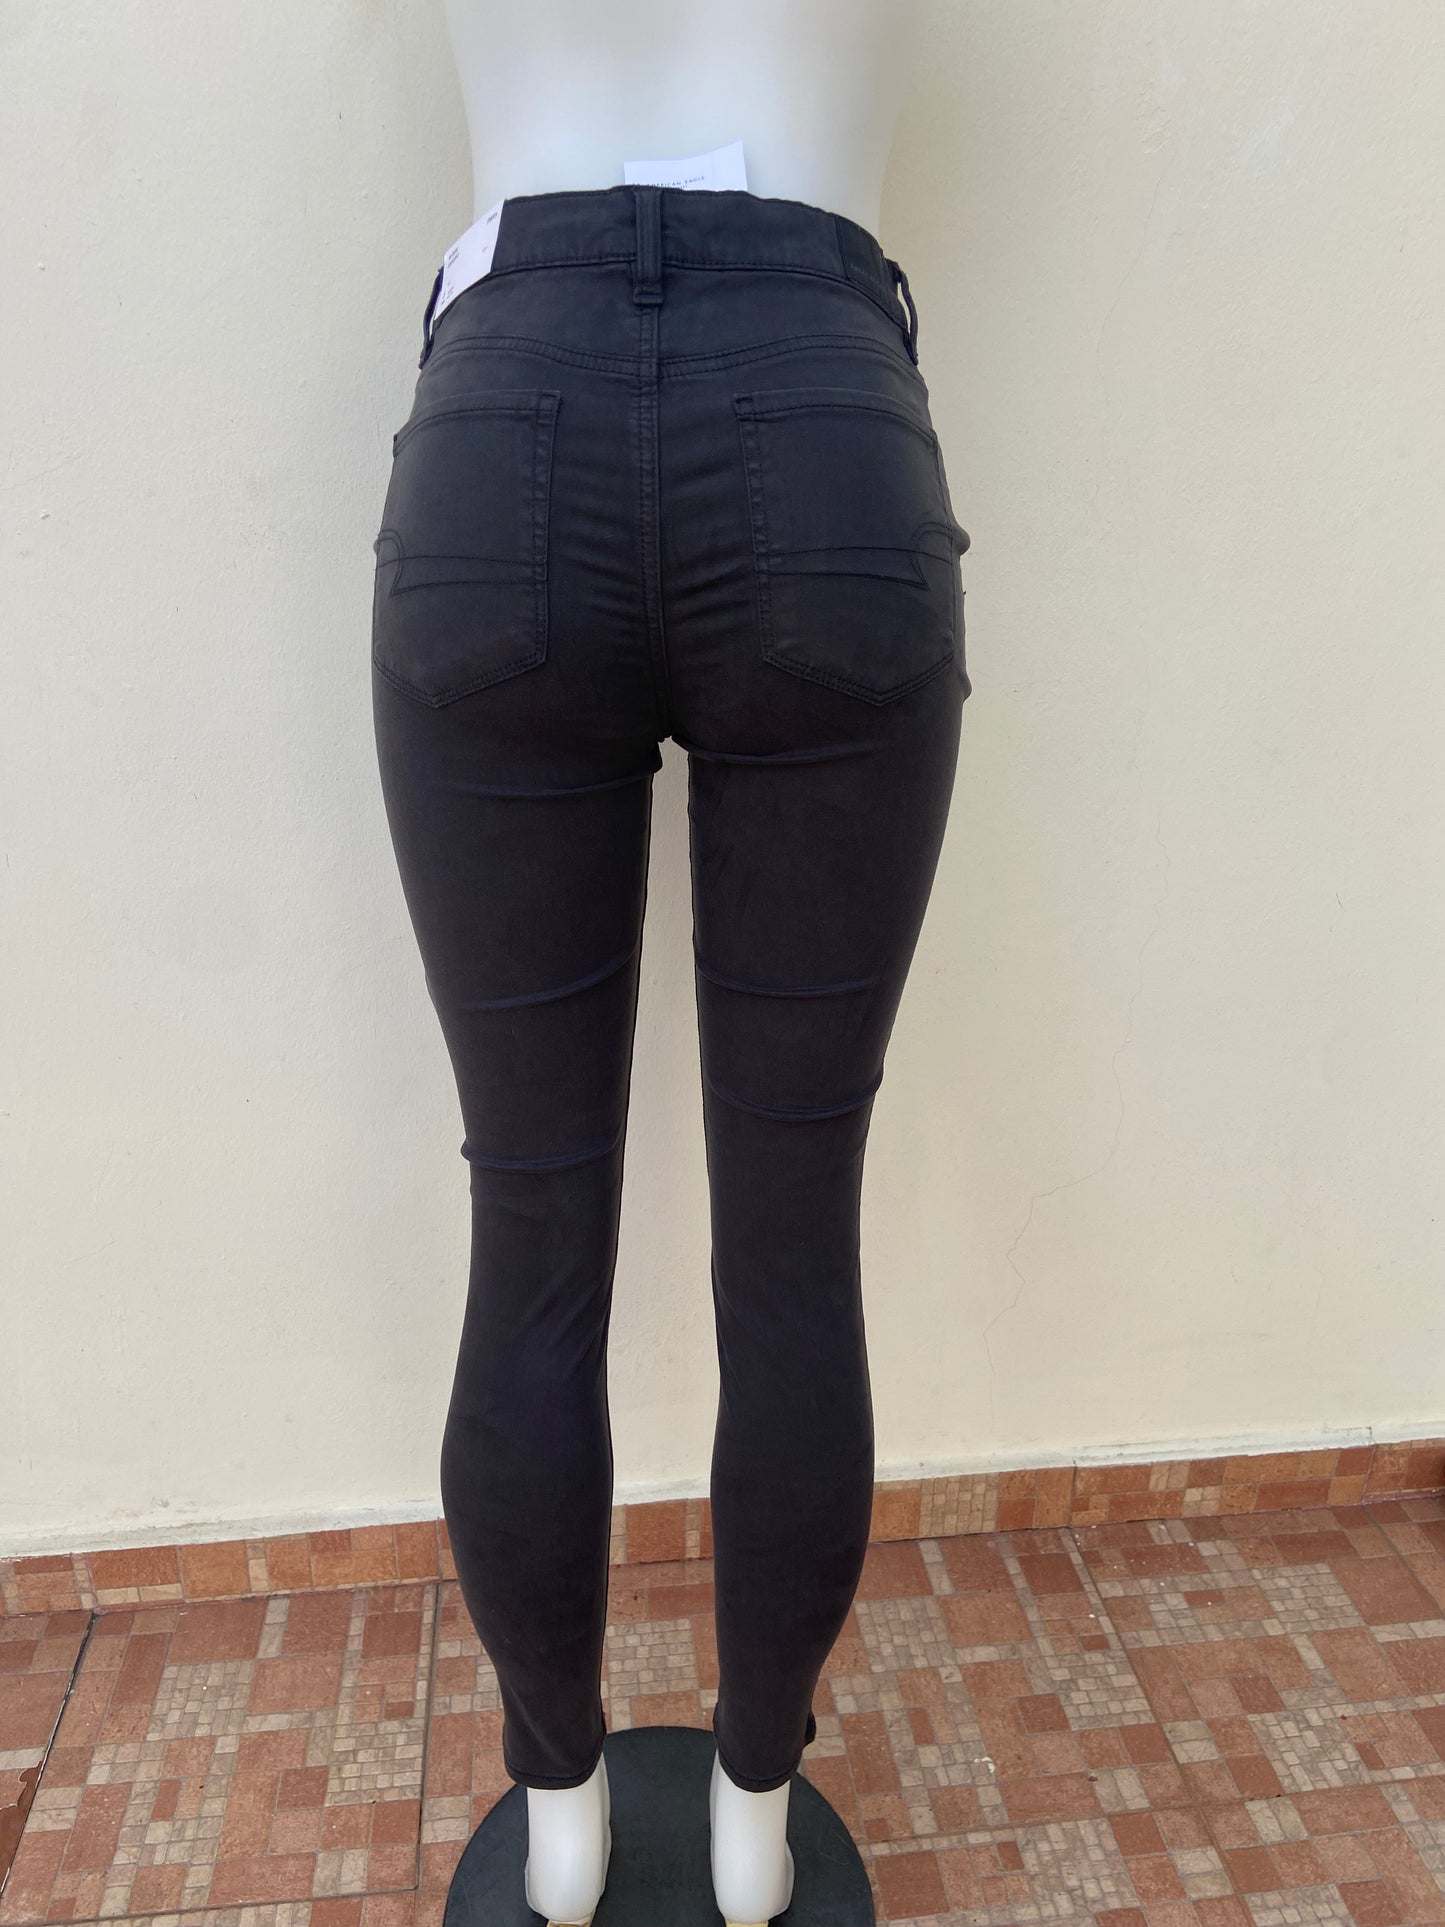 Pantalon jeans American Eagle original de color negro opaco liso STRET